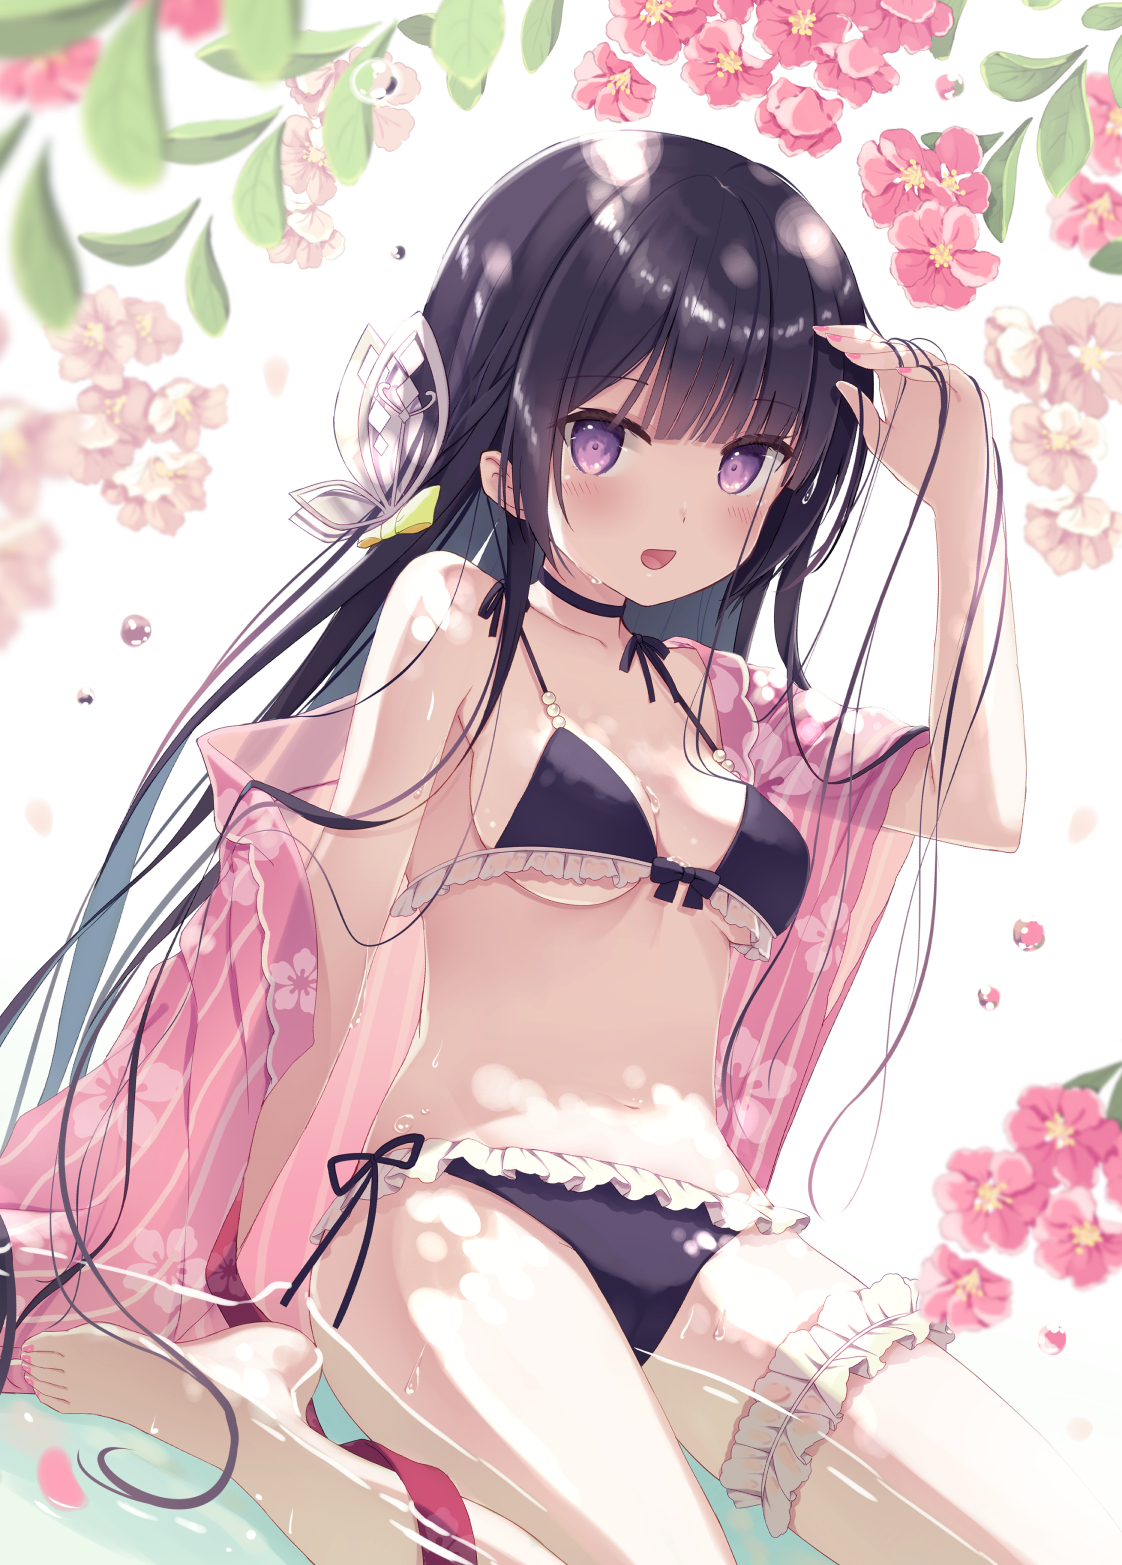 Anime 1122x1565 anime anime girls digital art artwork 2D portrait display Humuyun bikini kneeling dark hair purple eyes water flowers